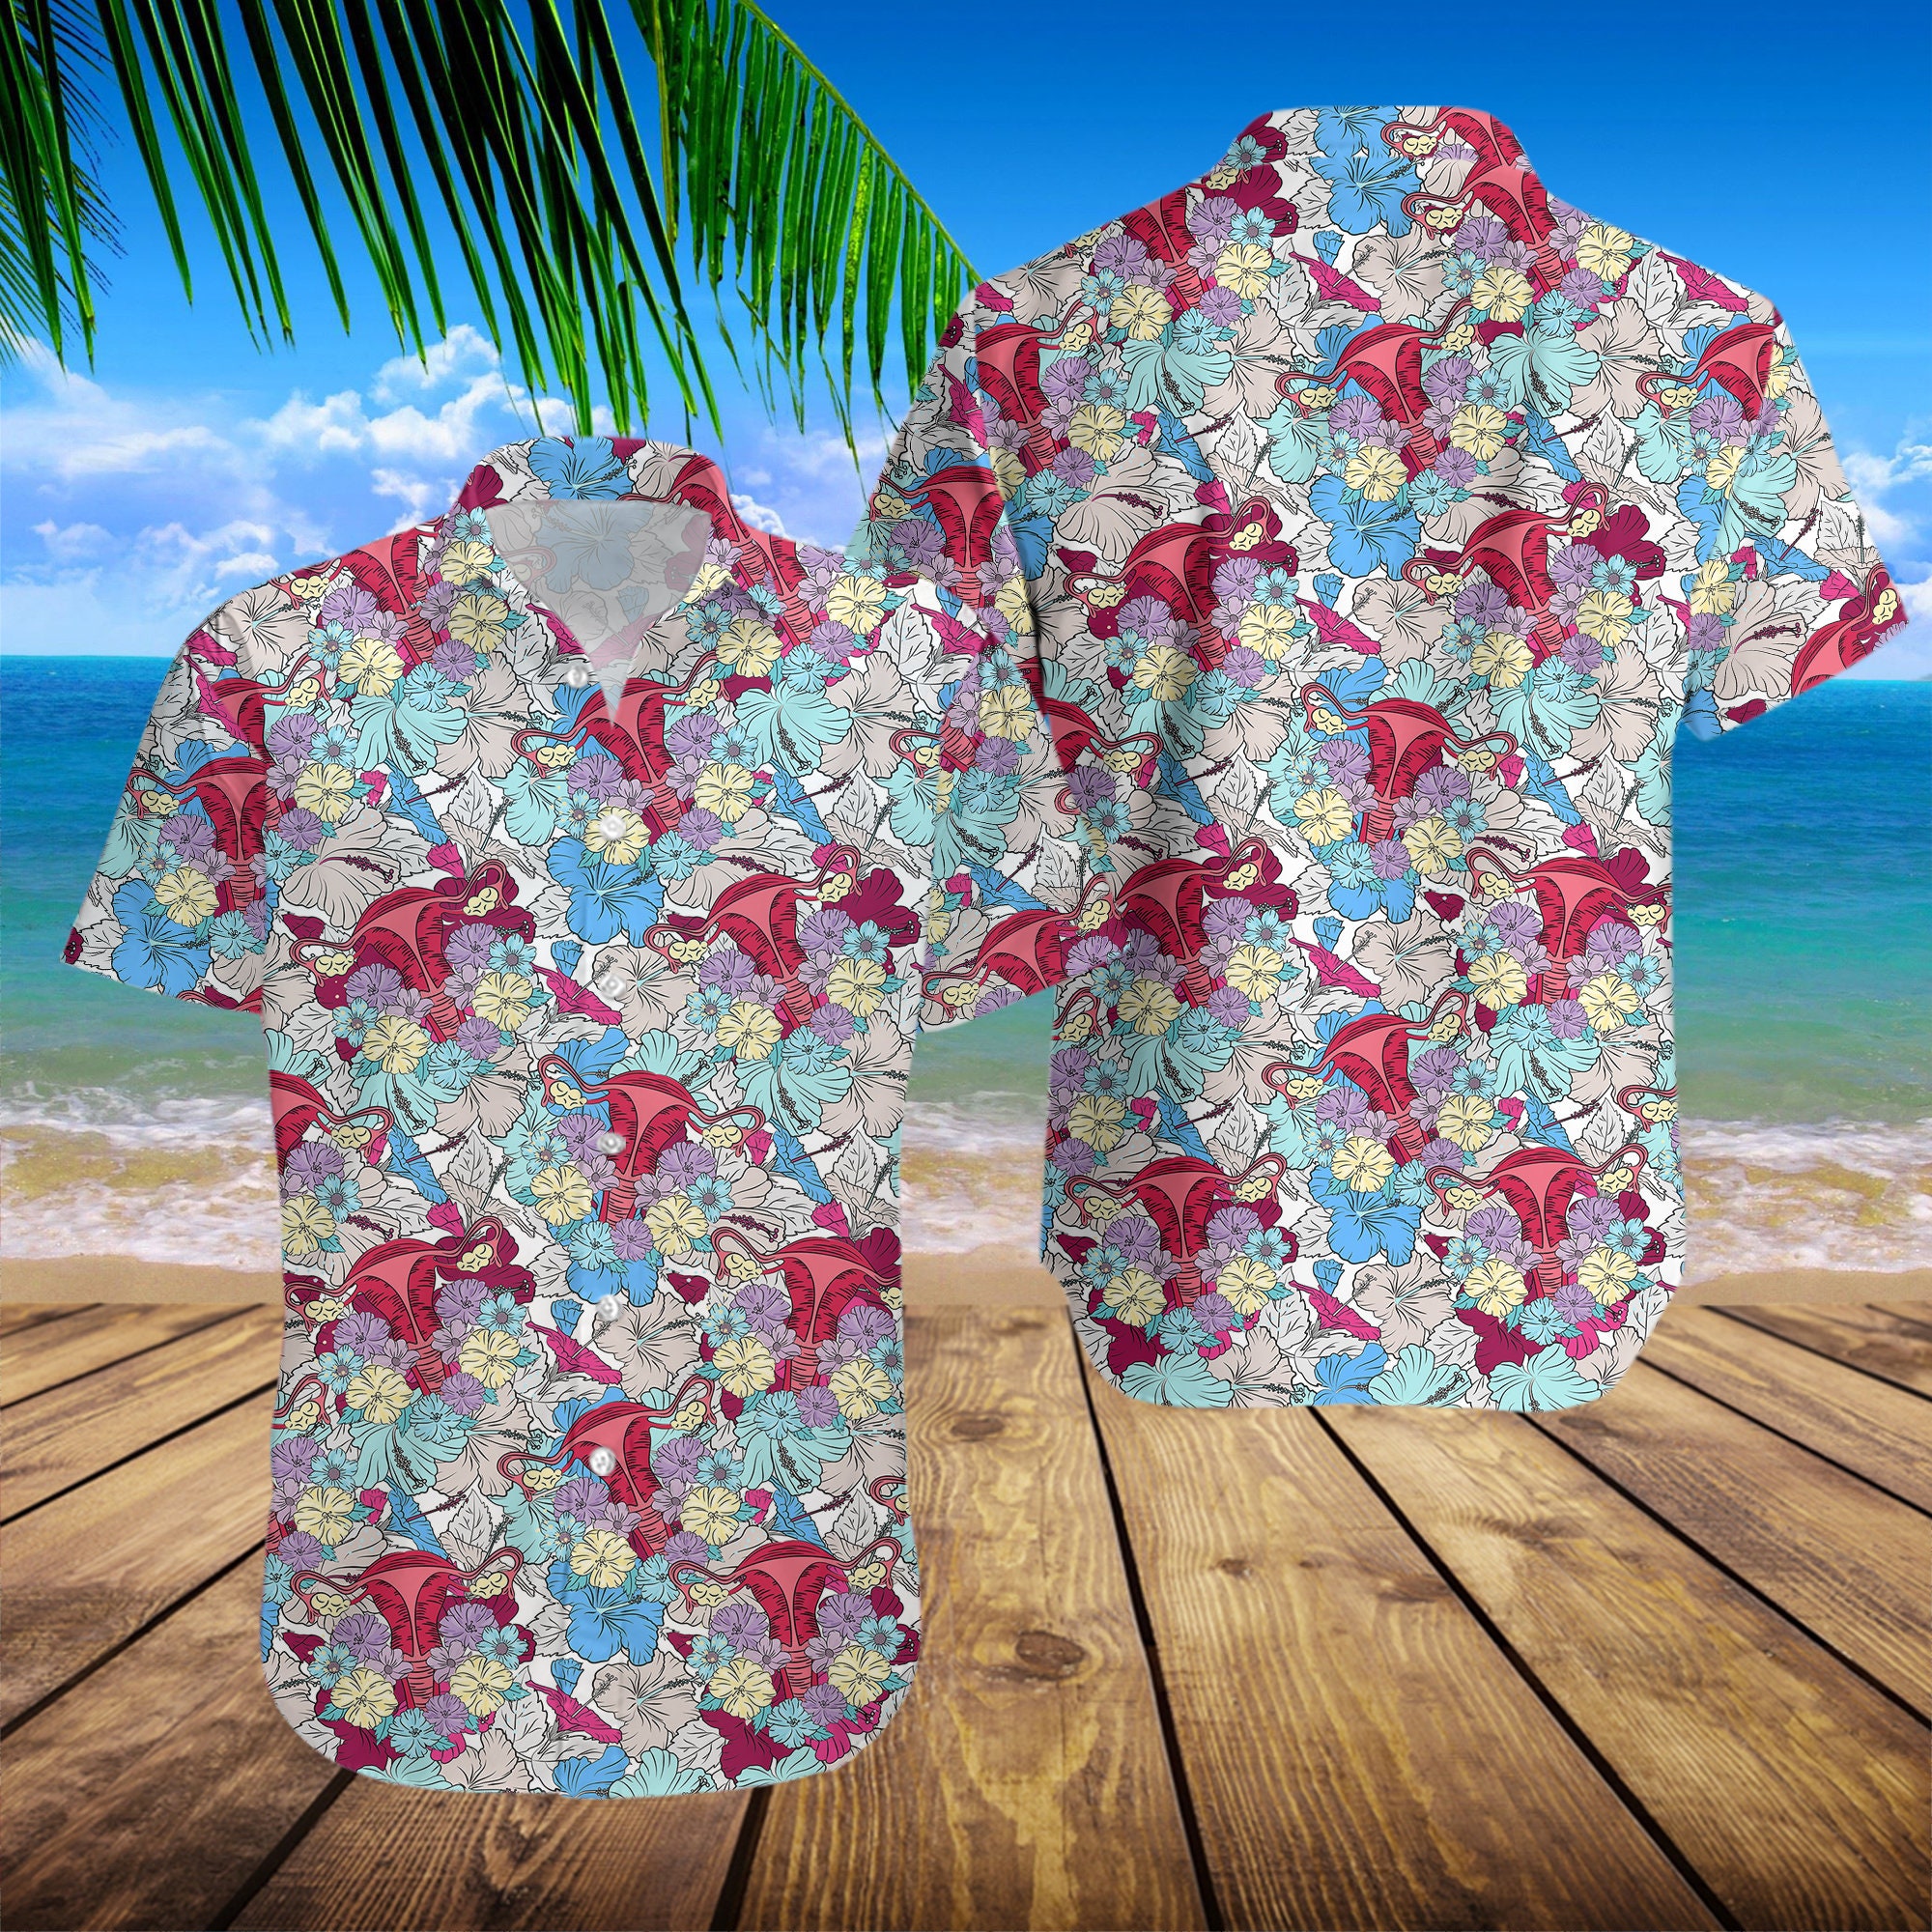 Mind Your Own Uterus Flower Women’s Rights Pro Choice Summer Hawaiian Shirt